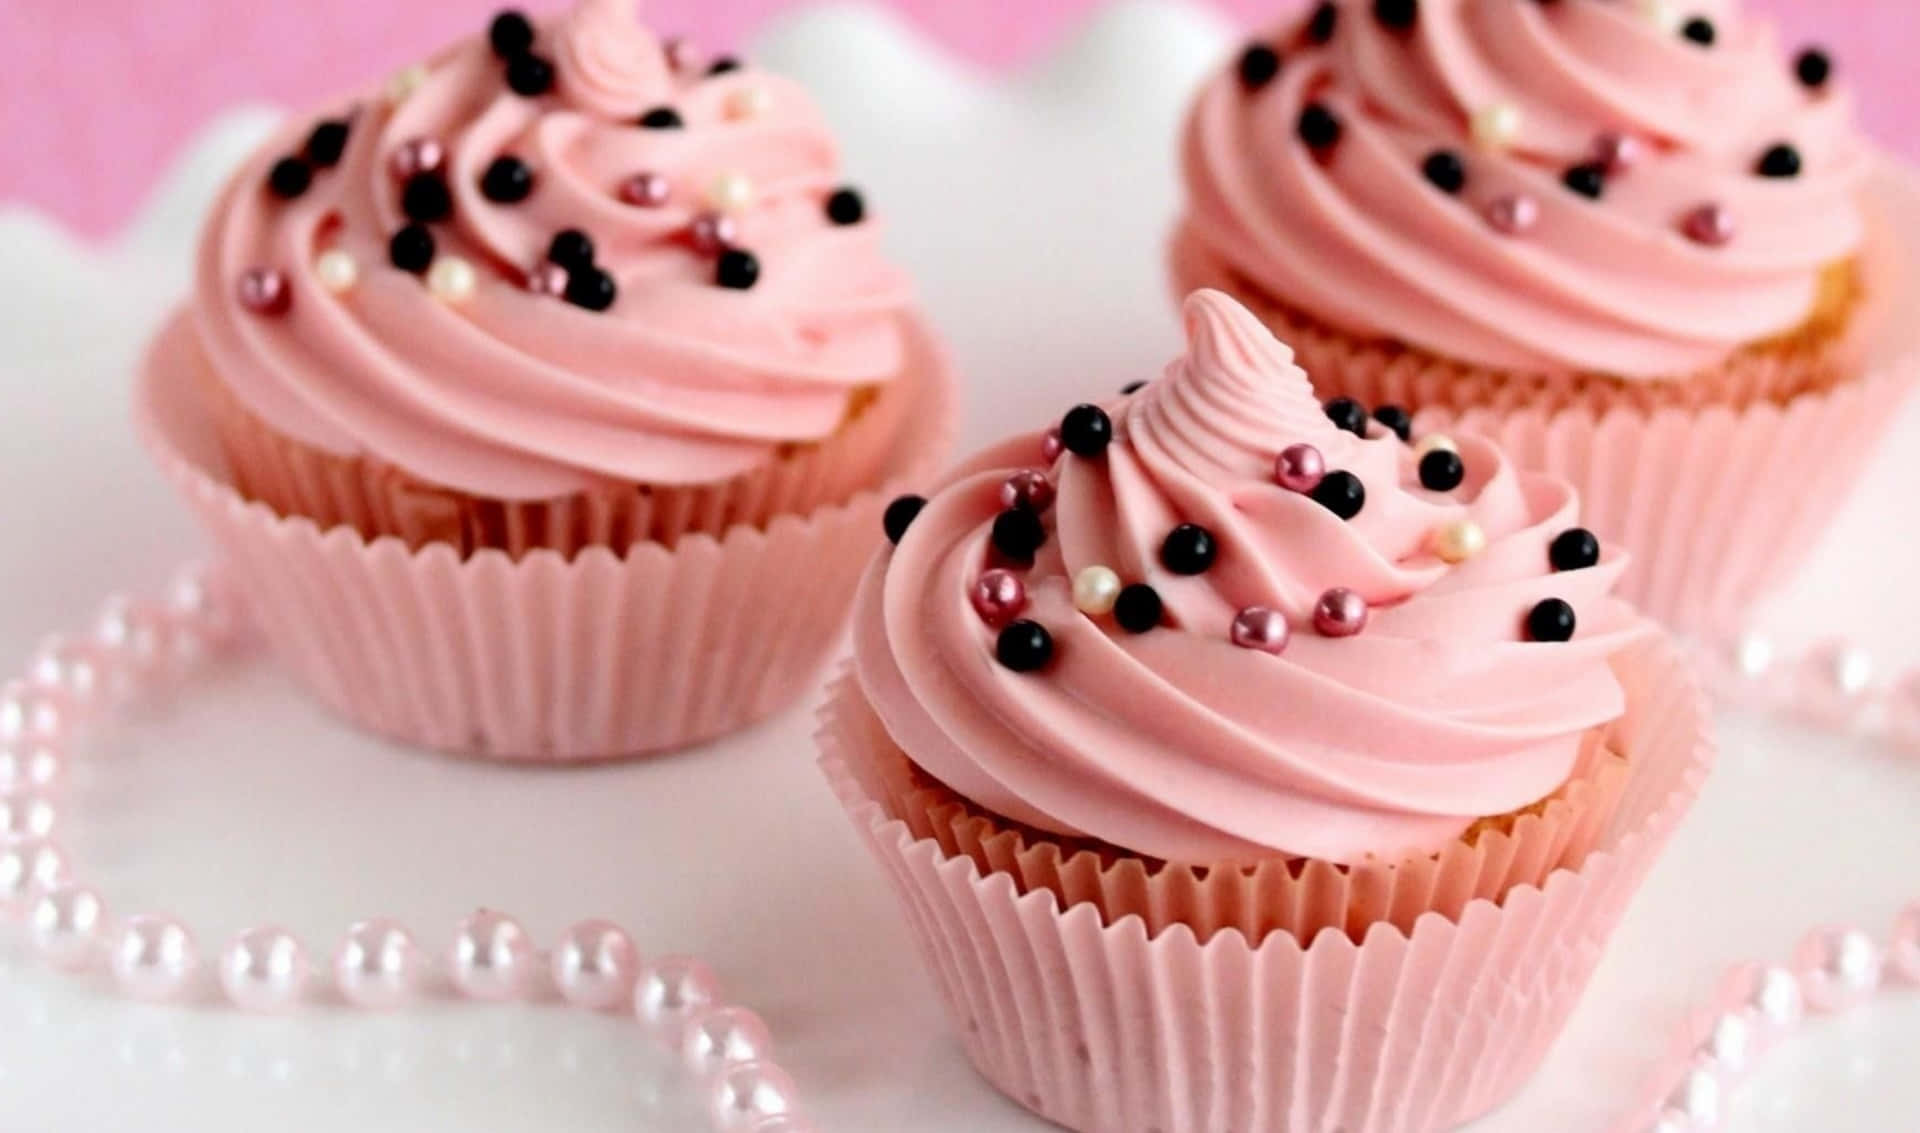 Three Pink Cupcakes With Black Sprinkles On Top